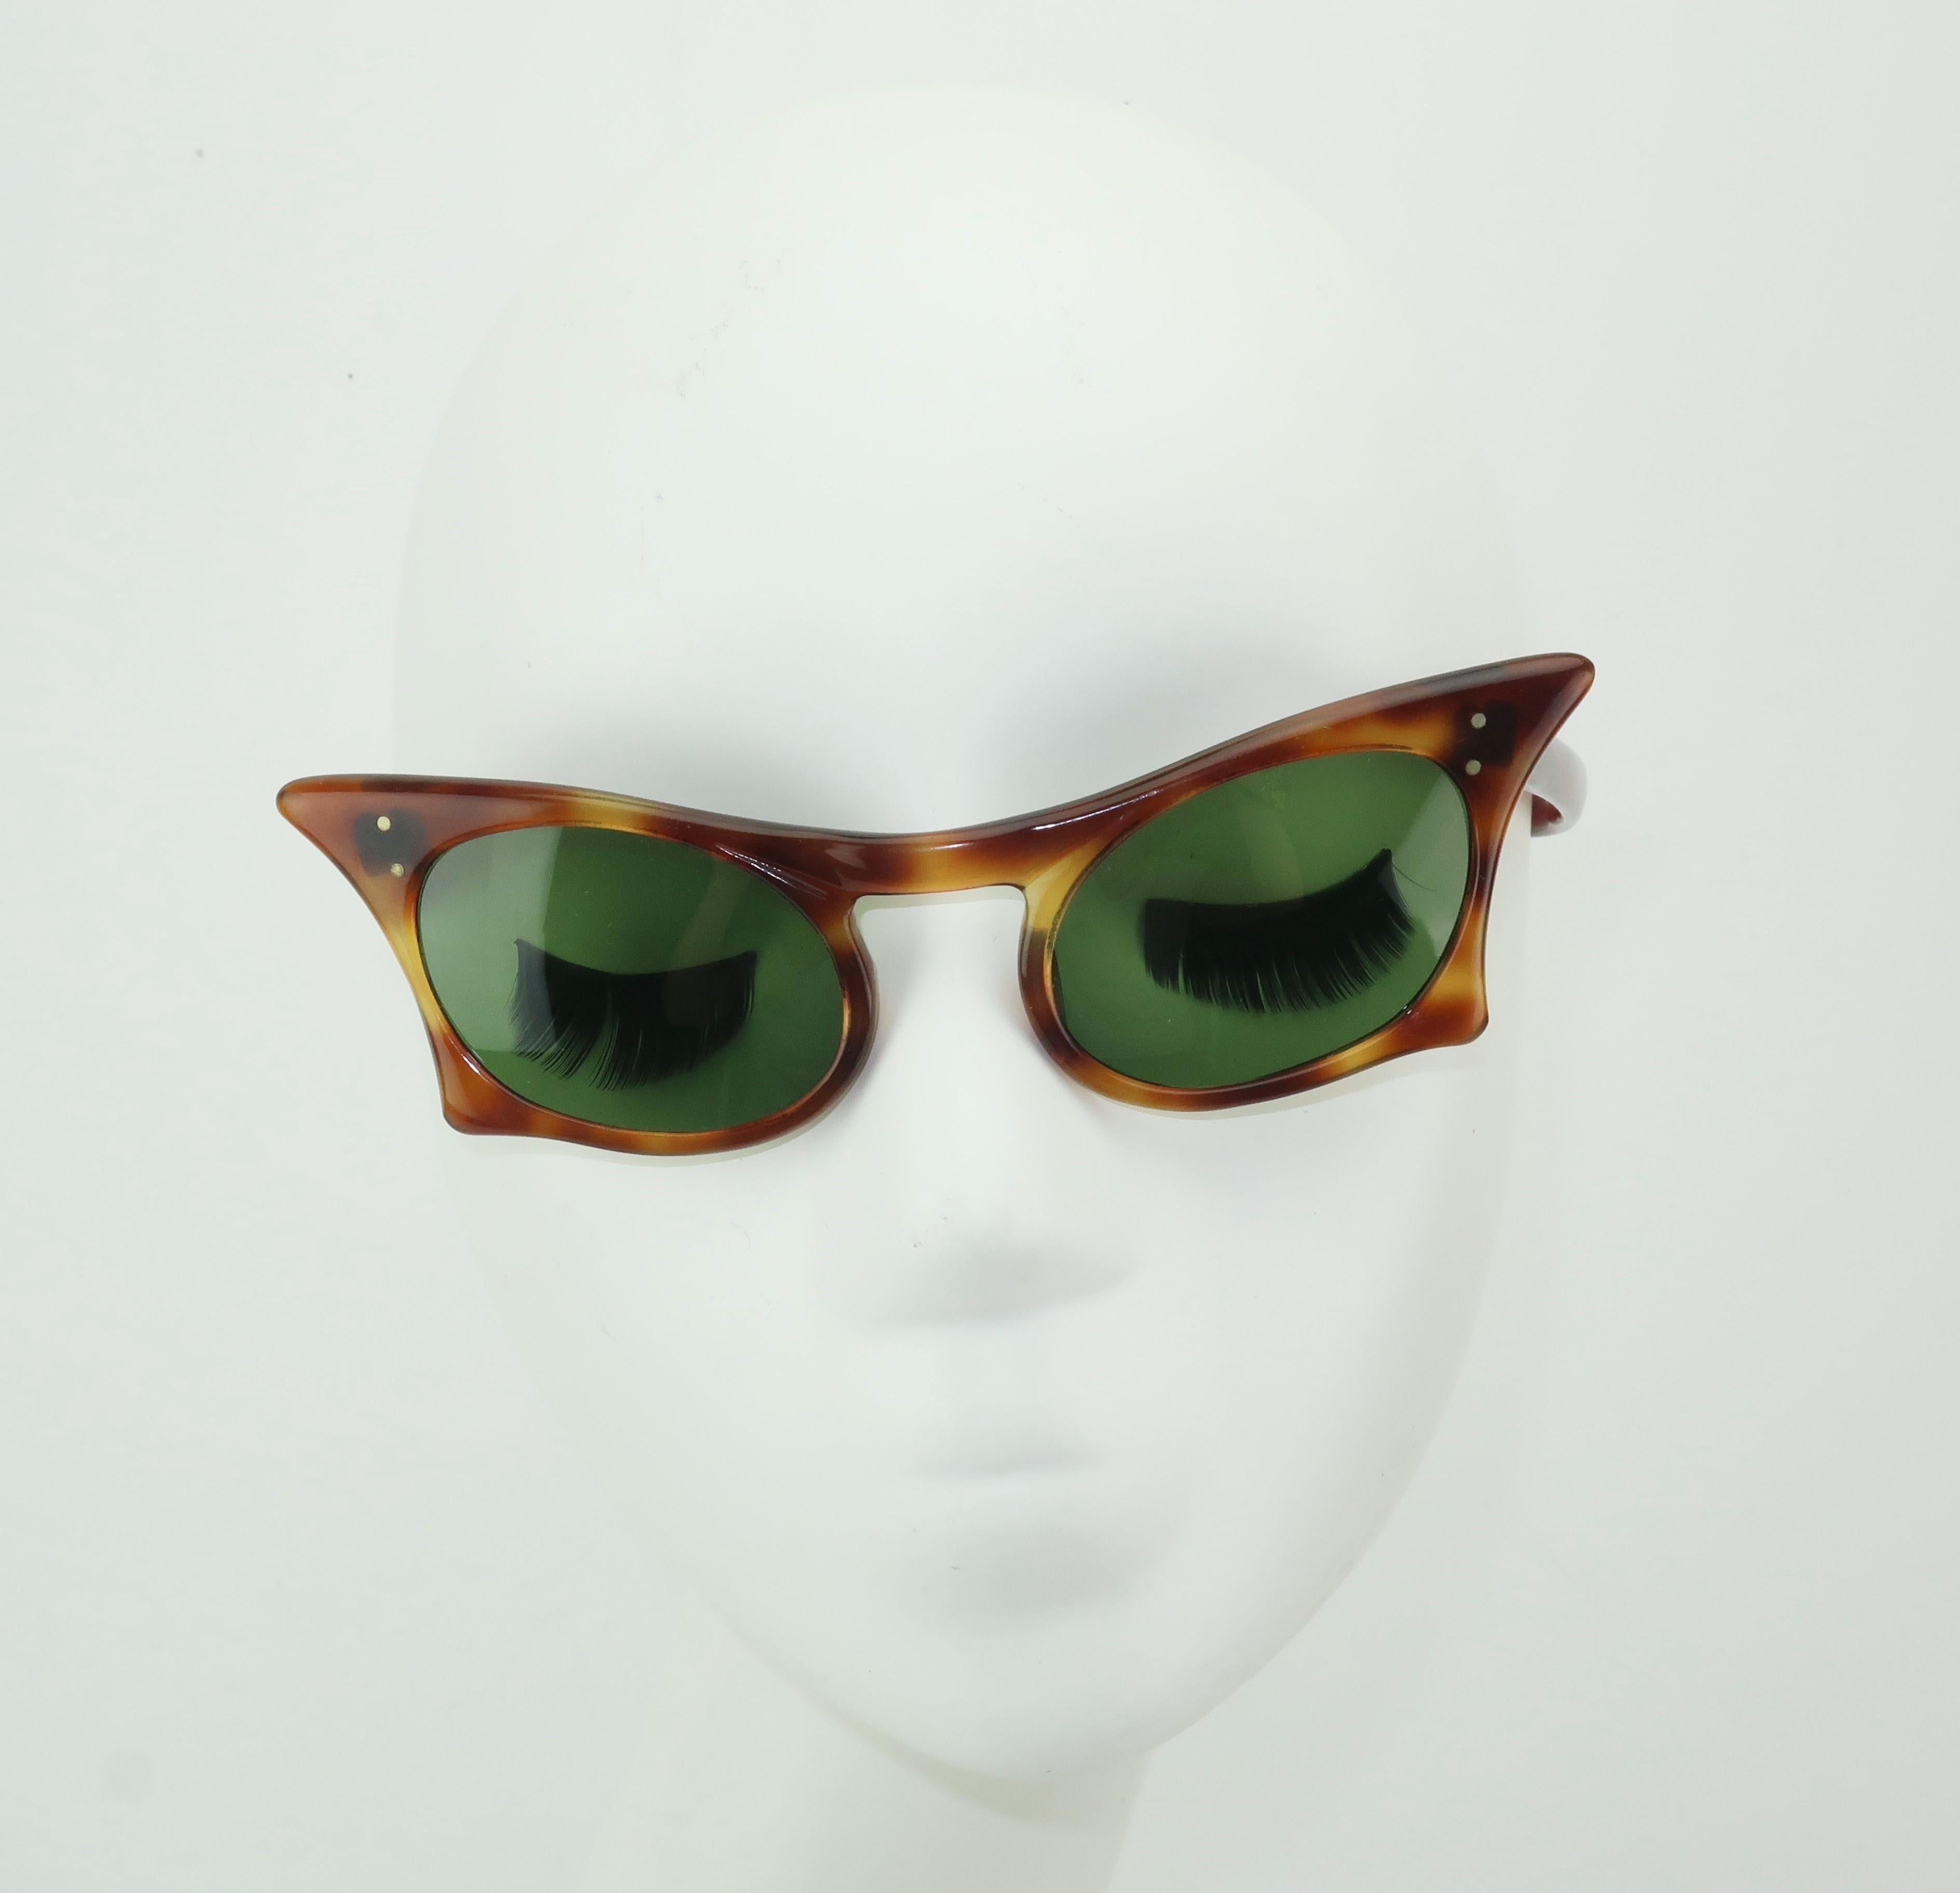 1950s sunglasses